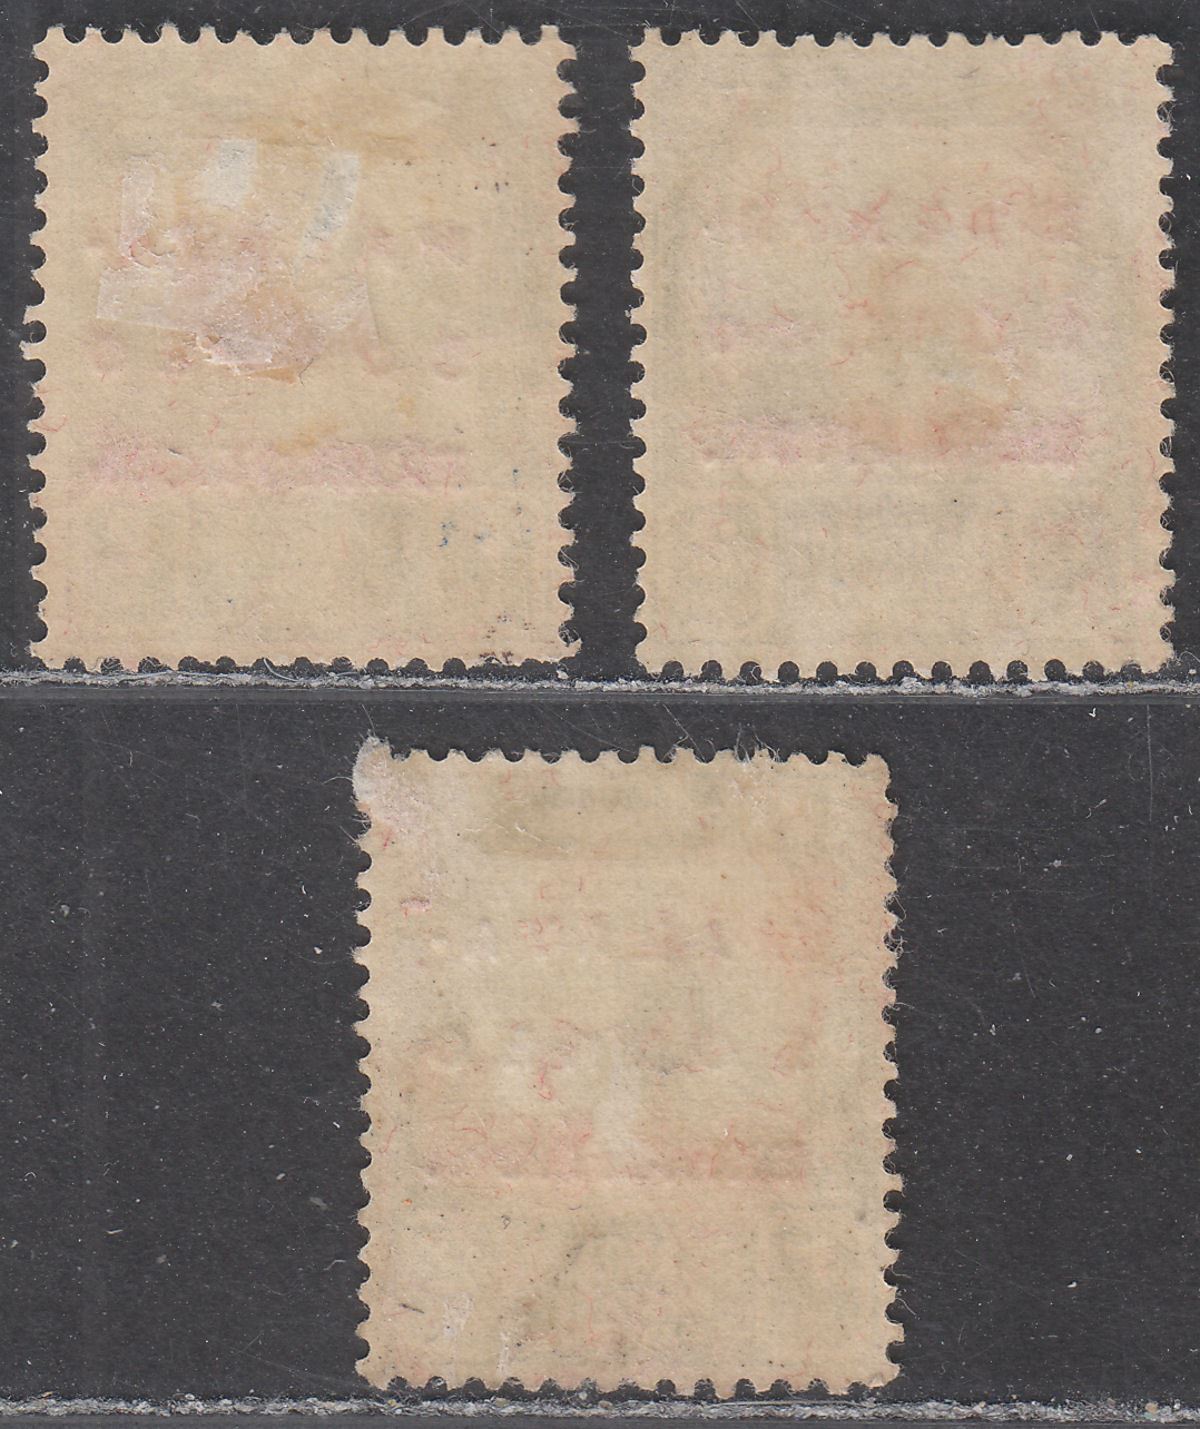 Malaya Trengganu 1922 2c Borneo Exhibition Overprints with Varieties Mint